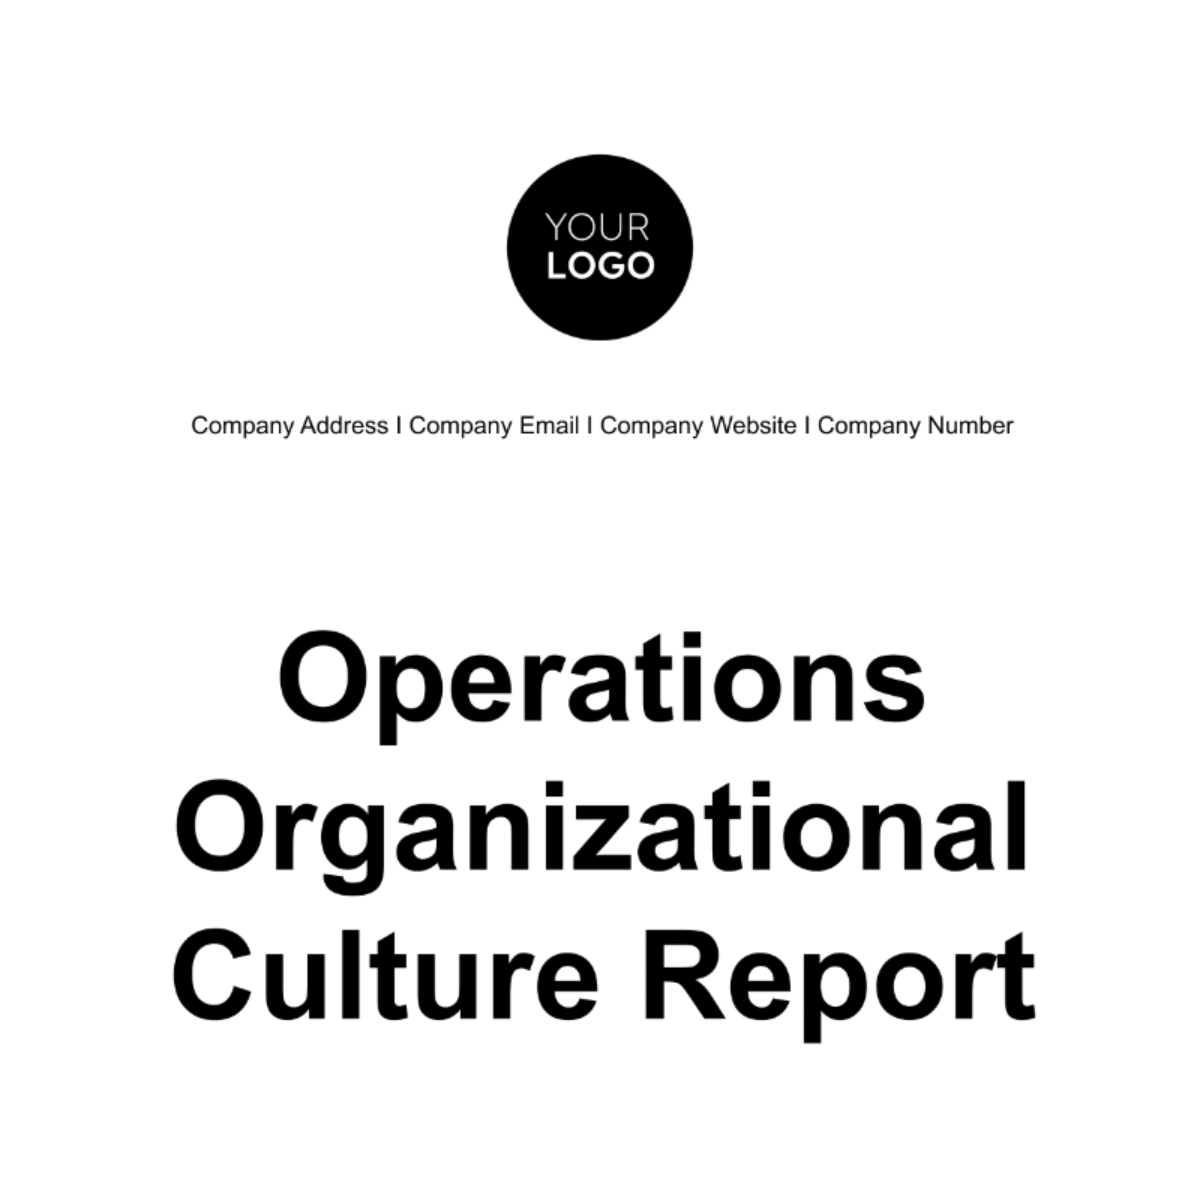 Operations Organizational Culture Report Template